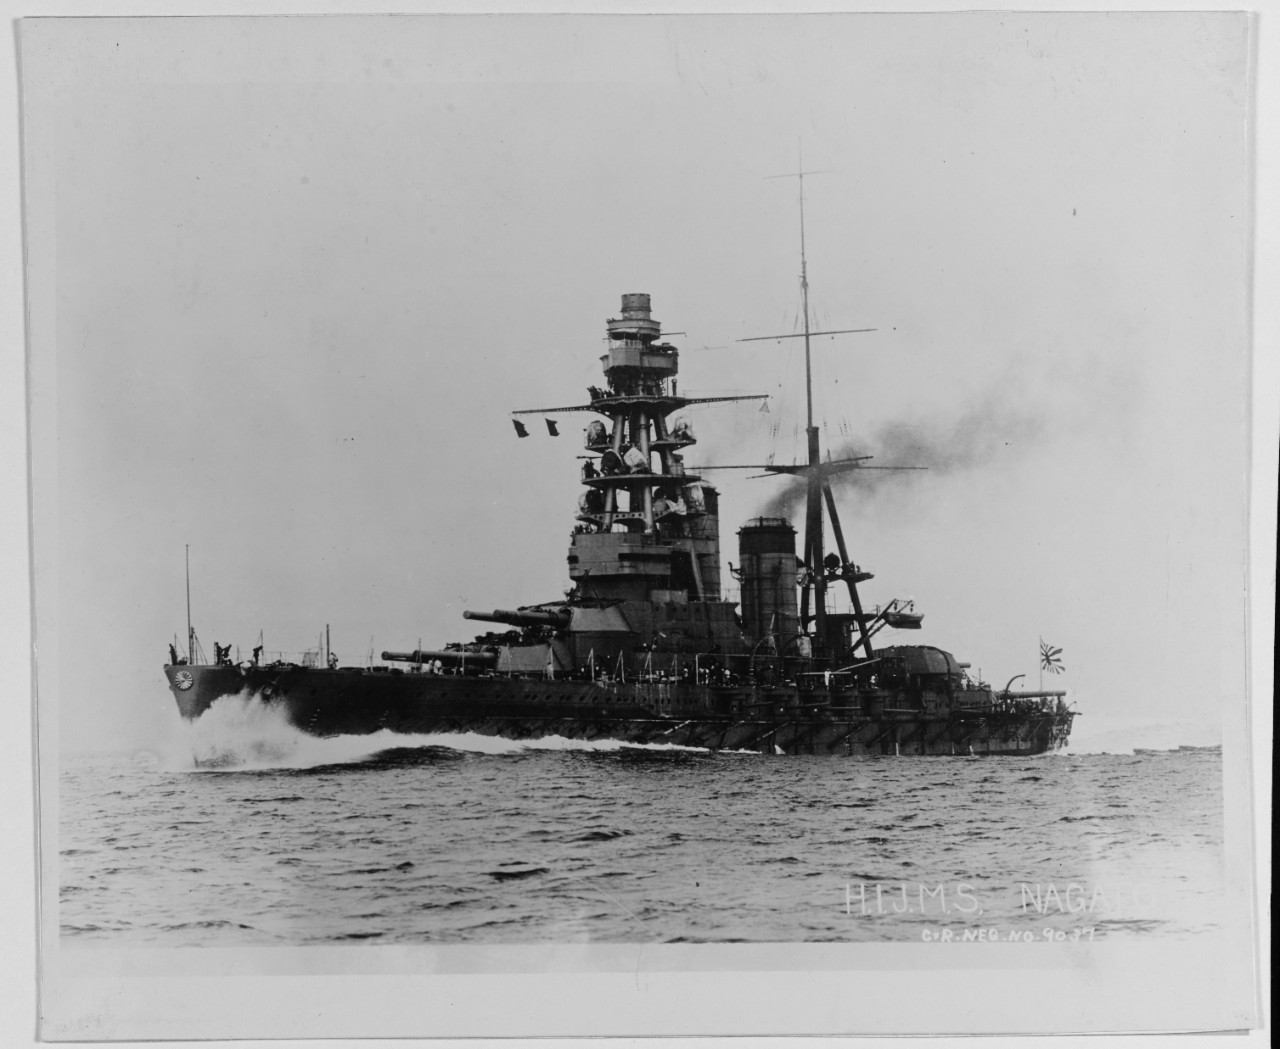 HIJMS NAGATO (Japanese Battleship, 1919)